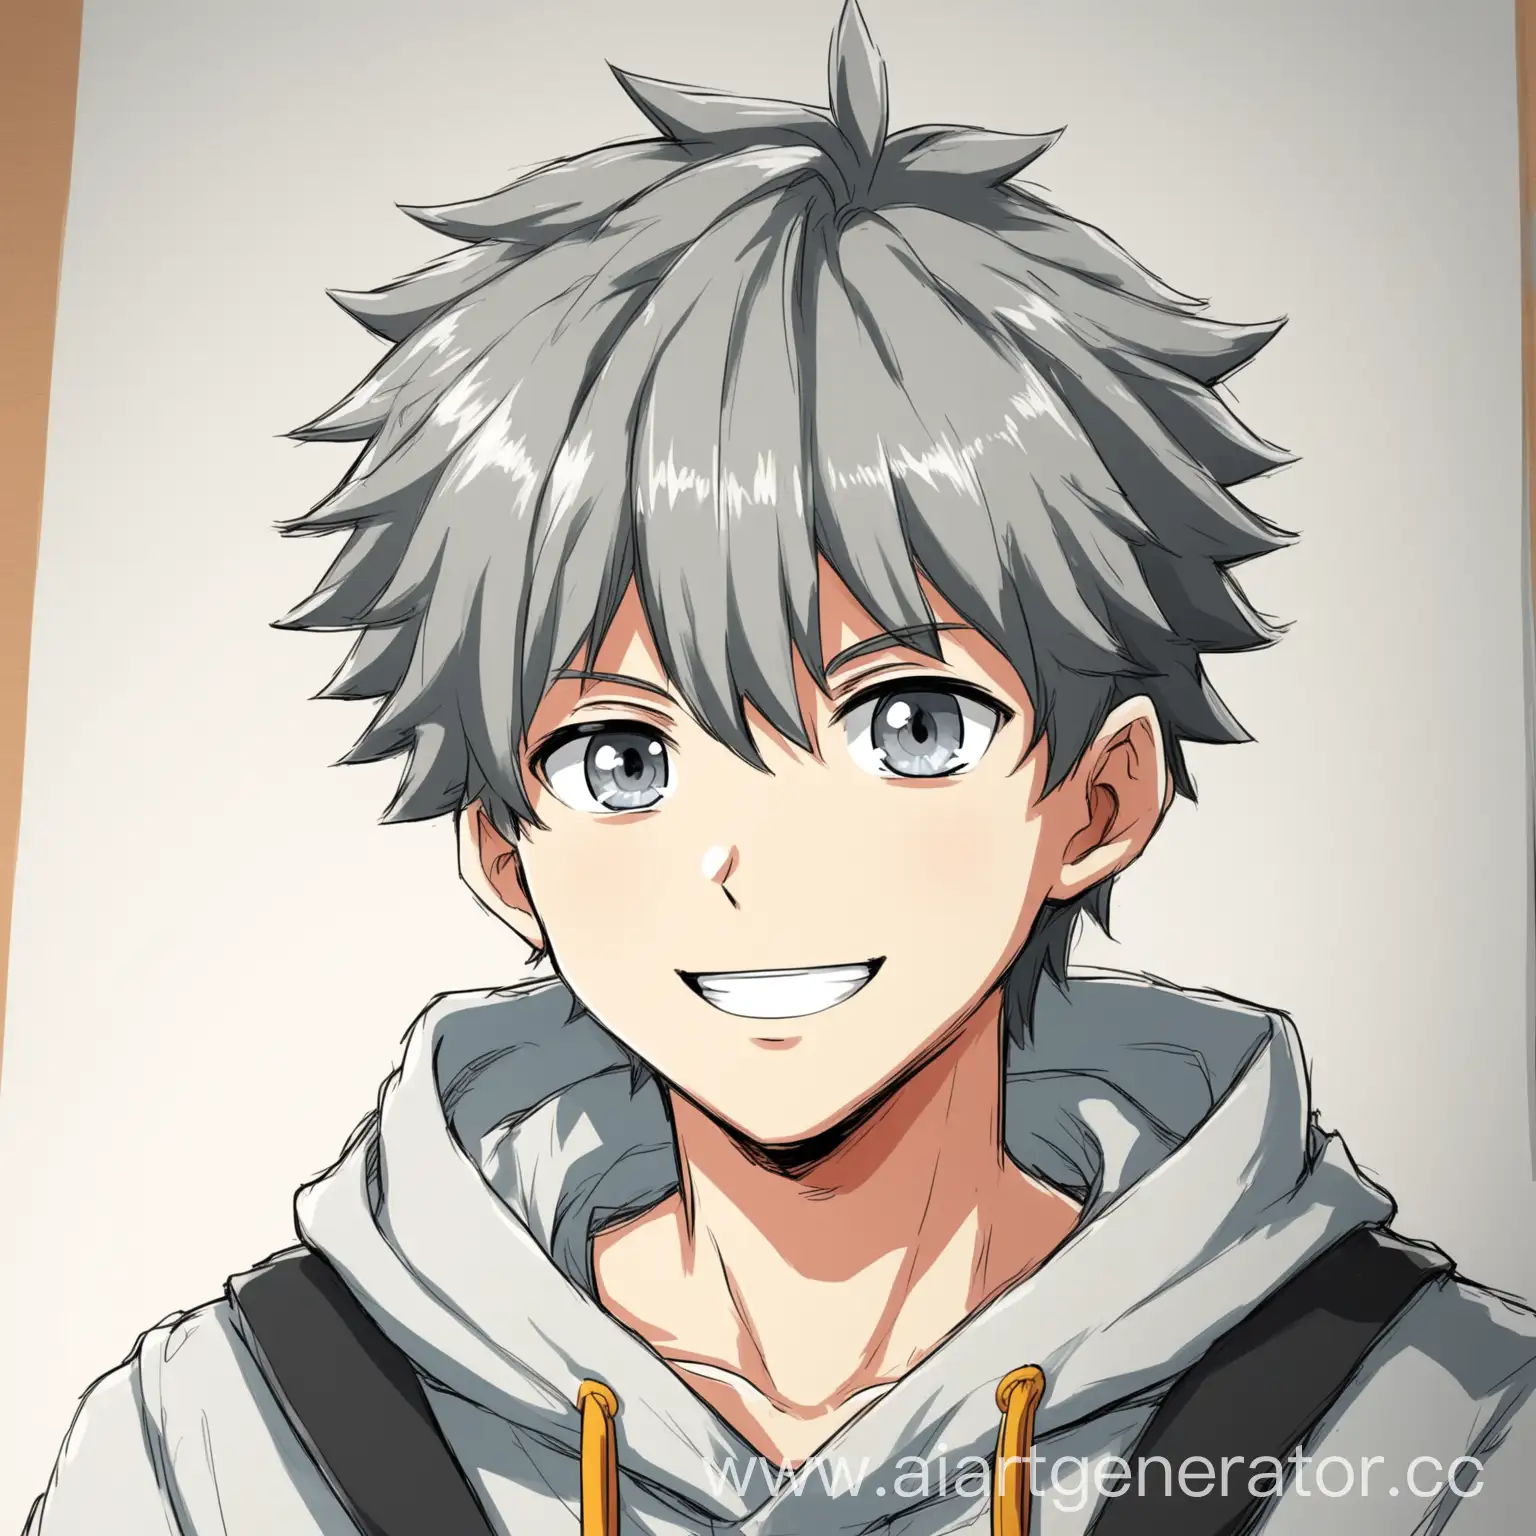 Cheerful-Anime-Style-Hero-Boy-with-Gray-Eyes